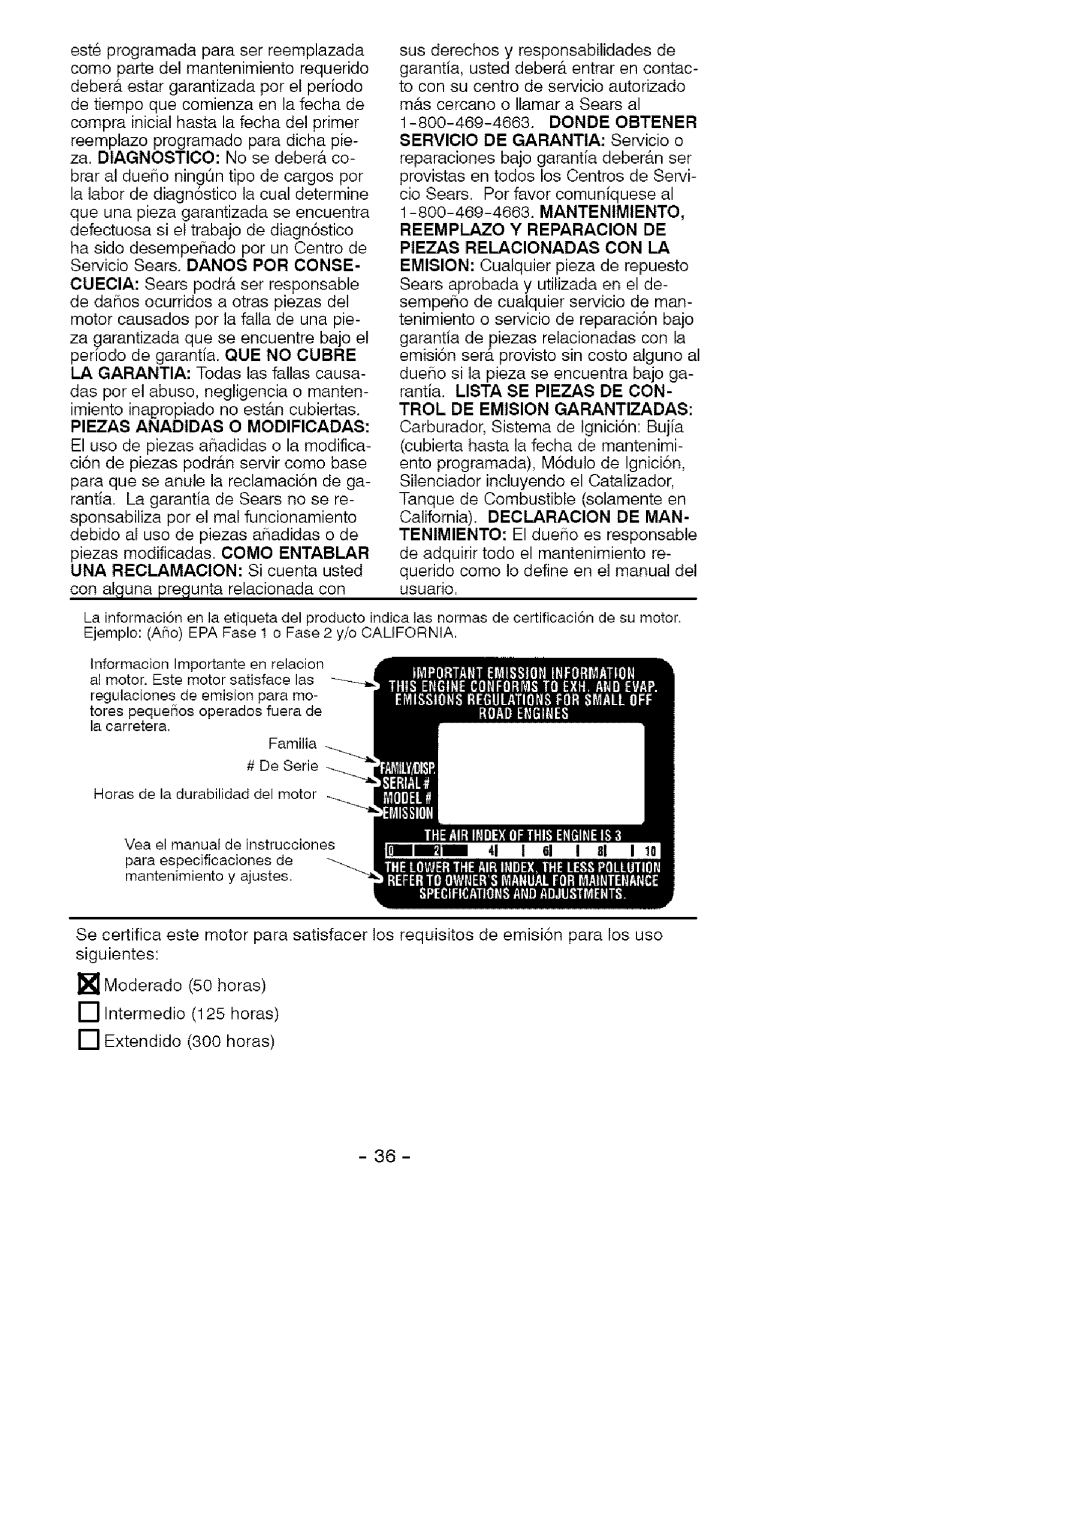 Craftsman 358.79474 manual Trol De Emision Garantizadas, 41 I 61 